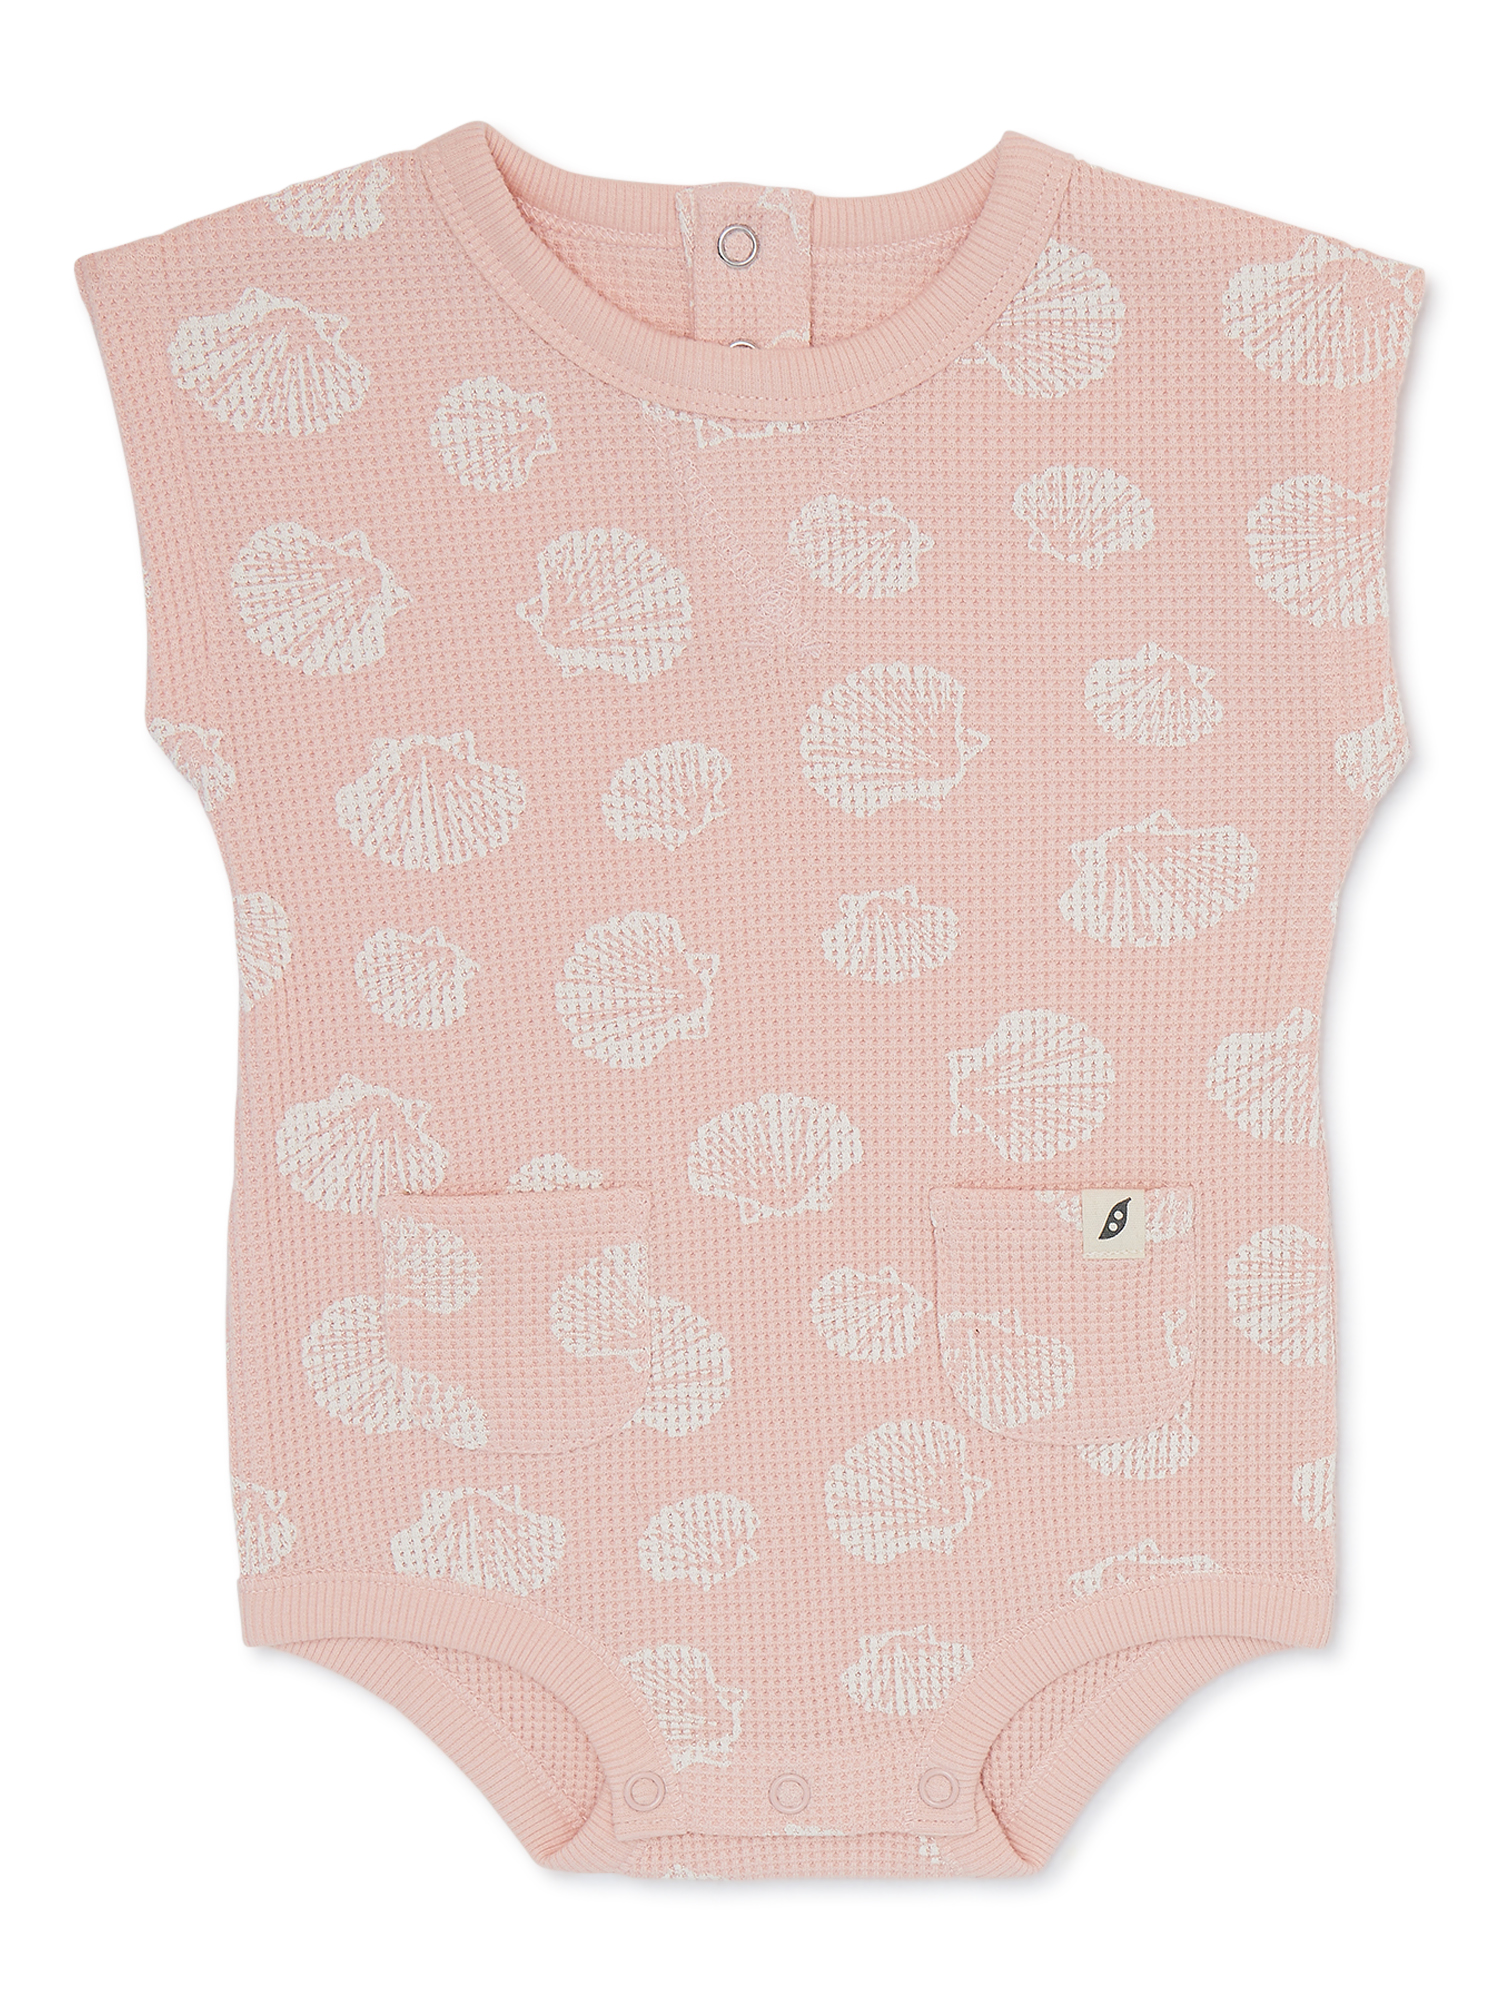 easy-peasy Baby Print Tank Bodysuit, Sizes 0-24 Months - image 1 of 4